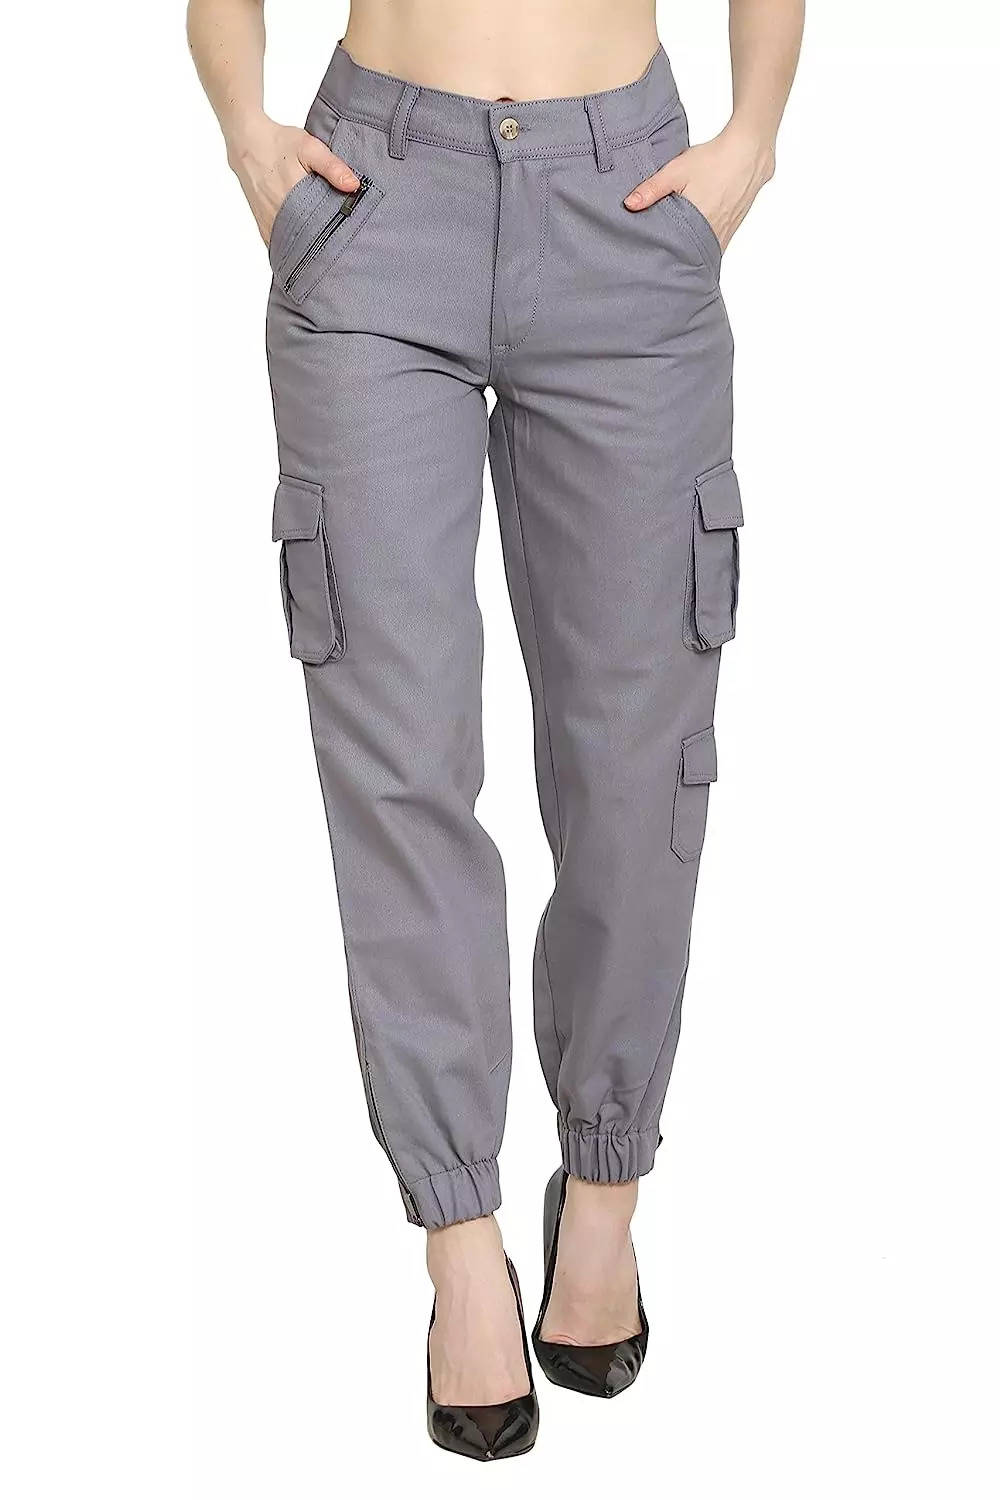 SKYLINEWEARS Women's Tactical Pants Combat Cargo Trousers Utility Work Pants  | eBay